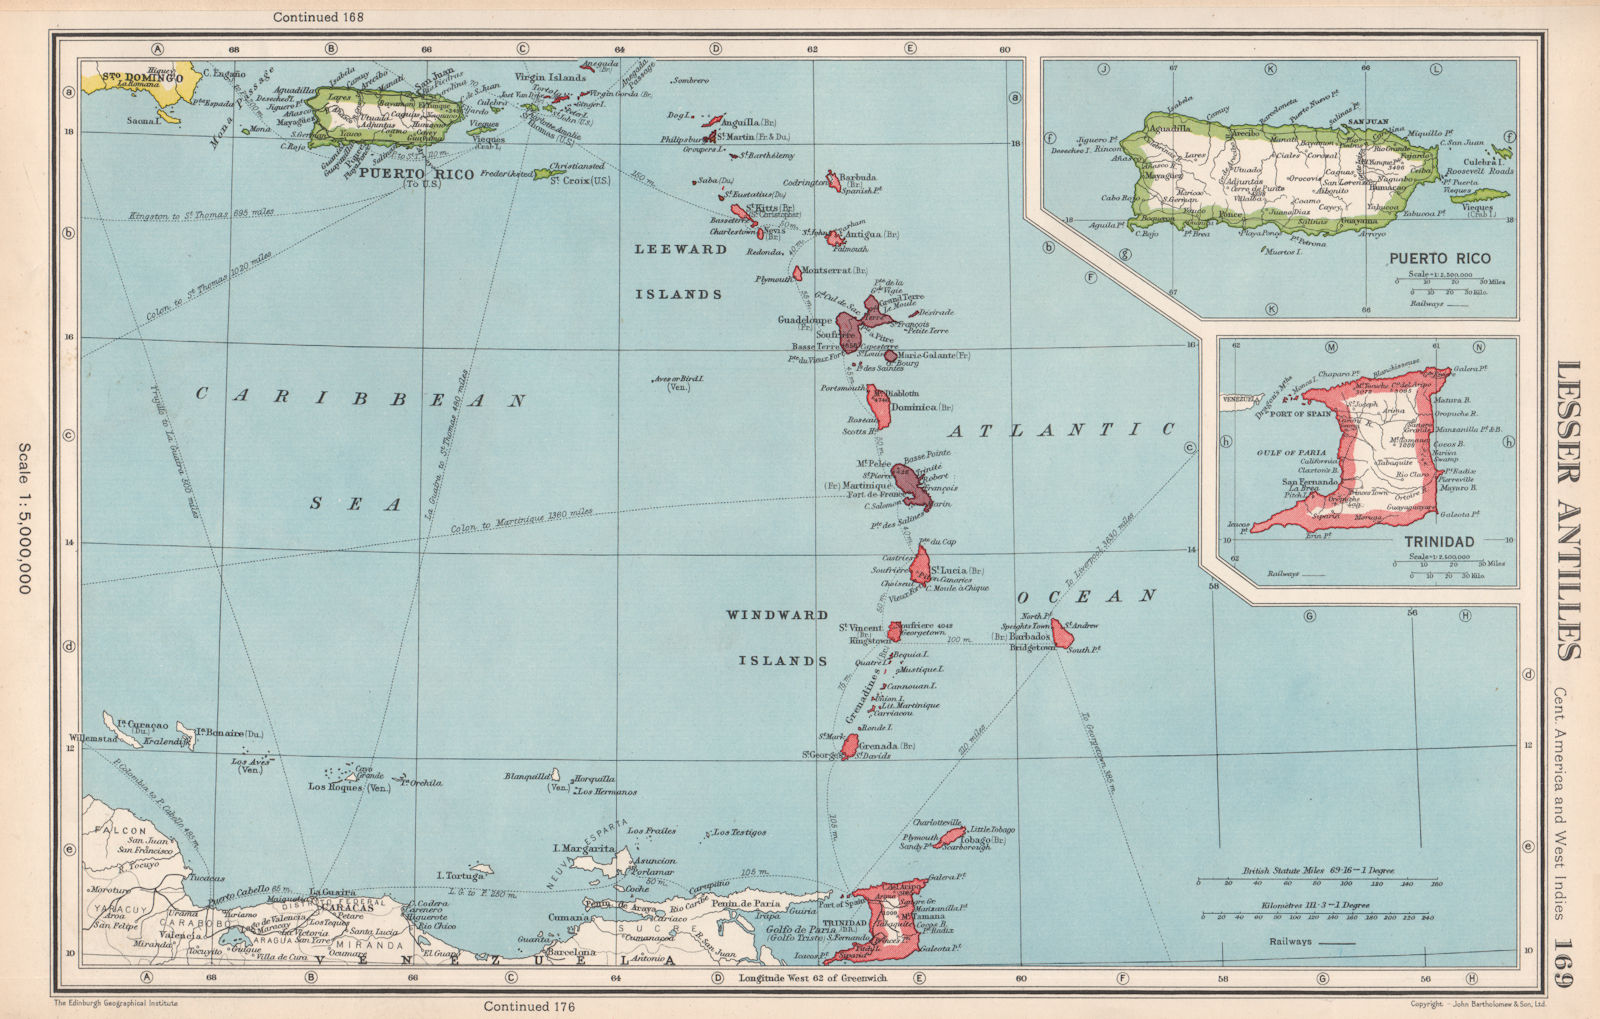 LESSER ANTILLES. Windward & Leeward islands. Puerto Rico. Trinidad 1952 map